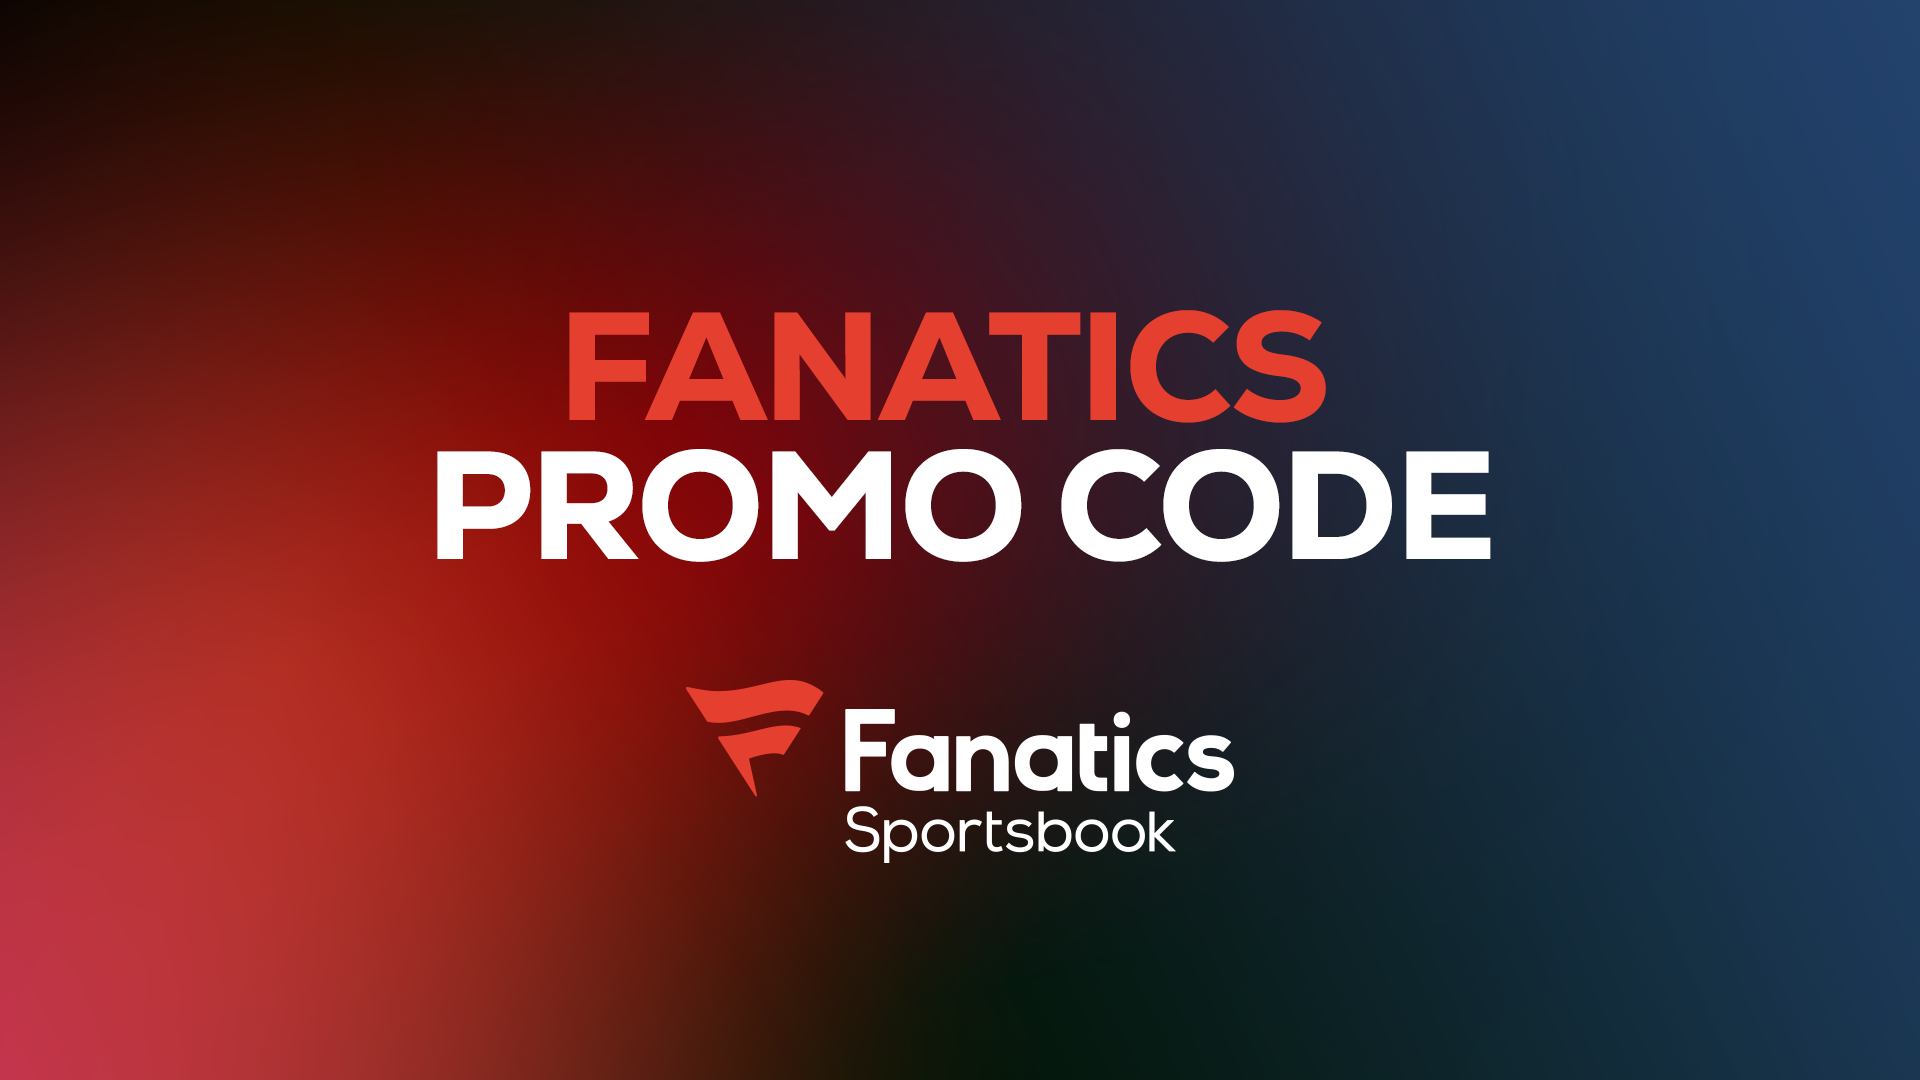 Fanatics Sportsbook promo: Land k in matching bonuses for NBA, NHL, MLB